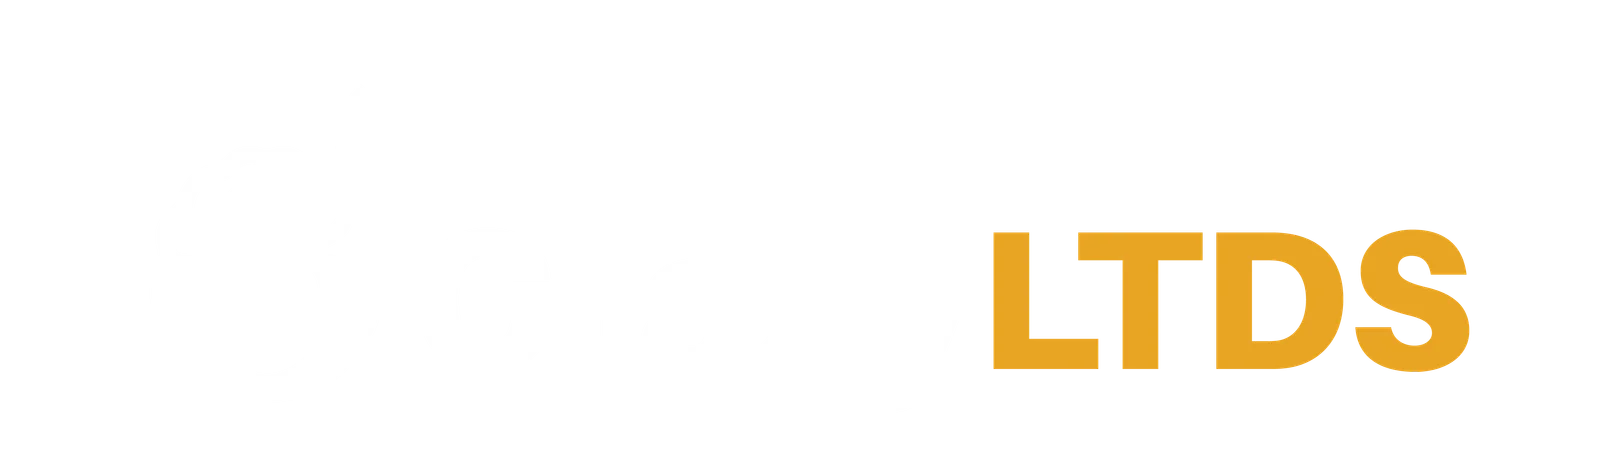 www.crazyltds.com